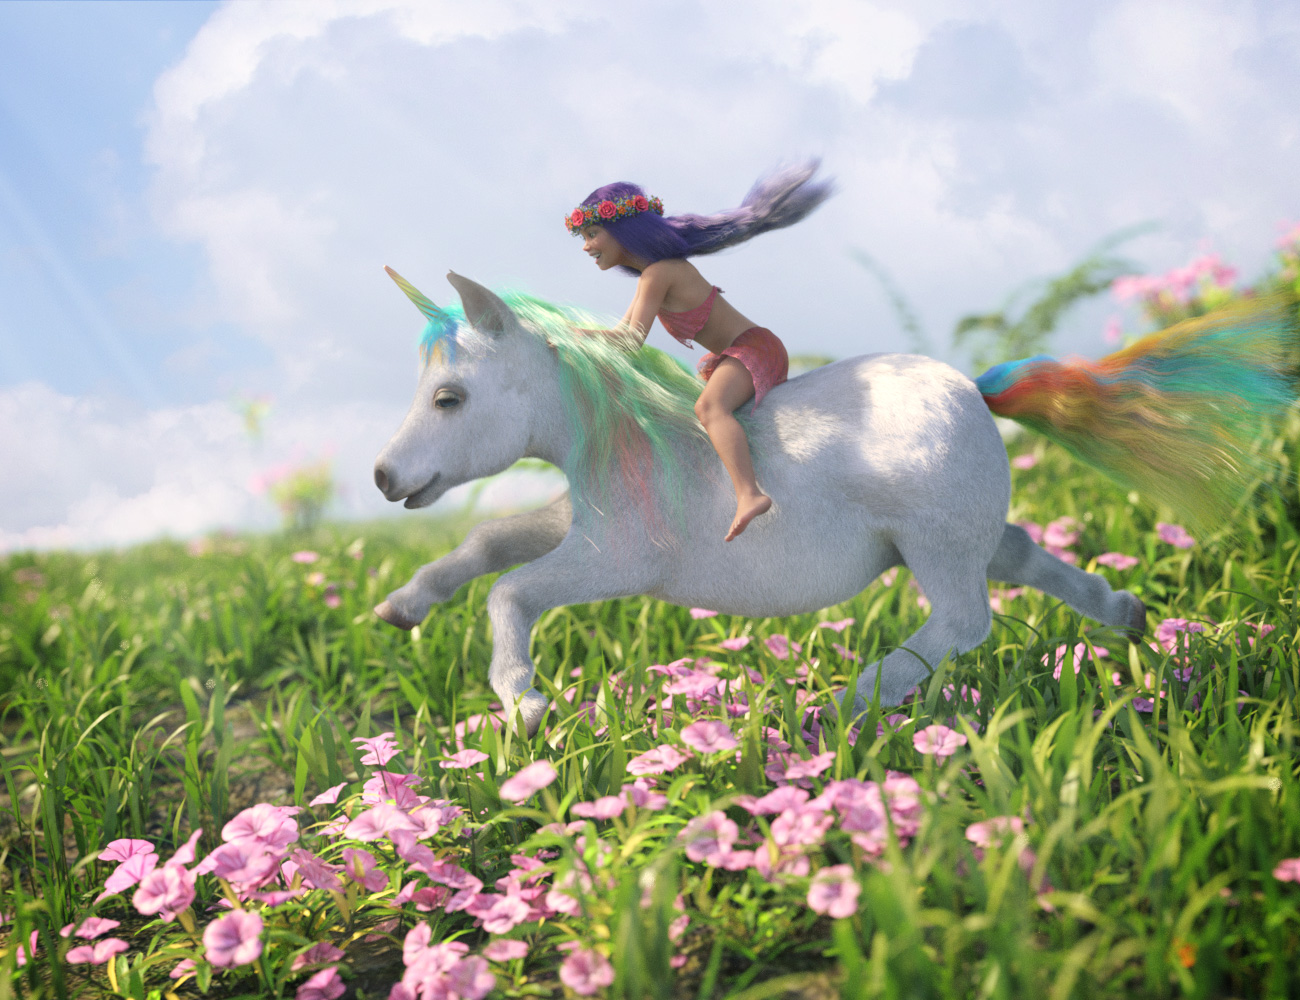 Pocket the Miniature Horse by: Hypertaf, 3D Models by Daz 3D